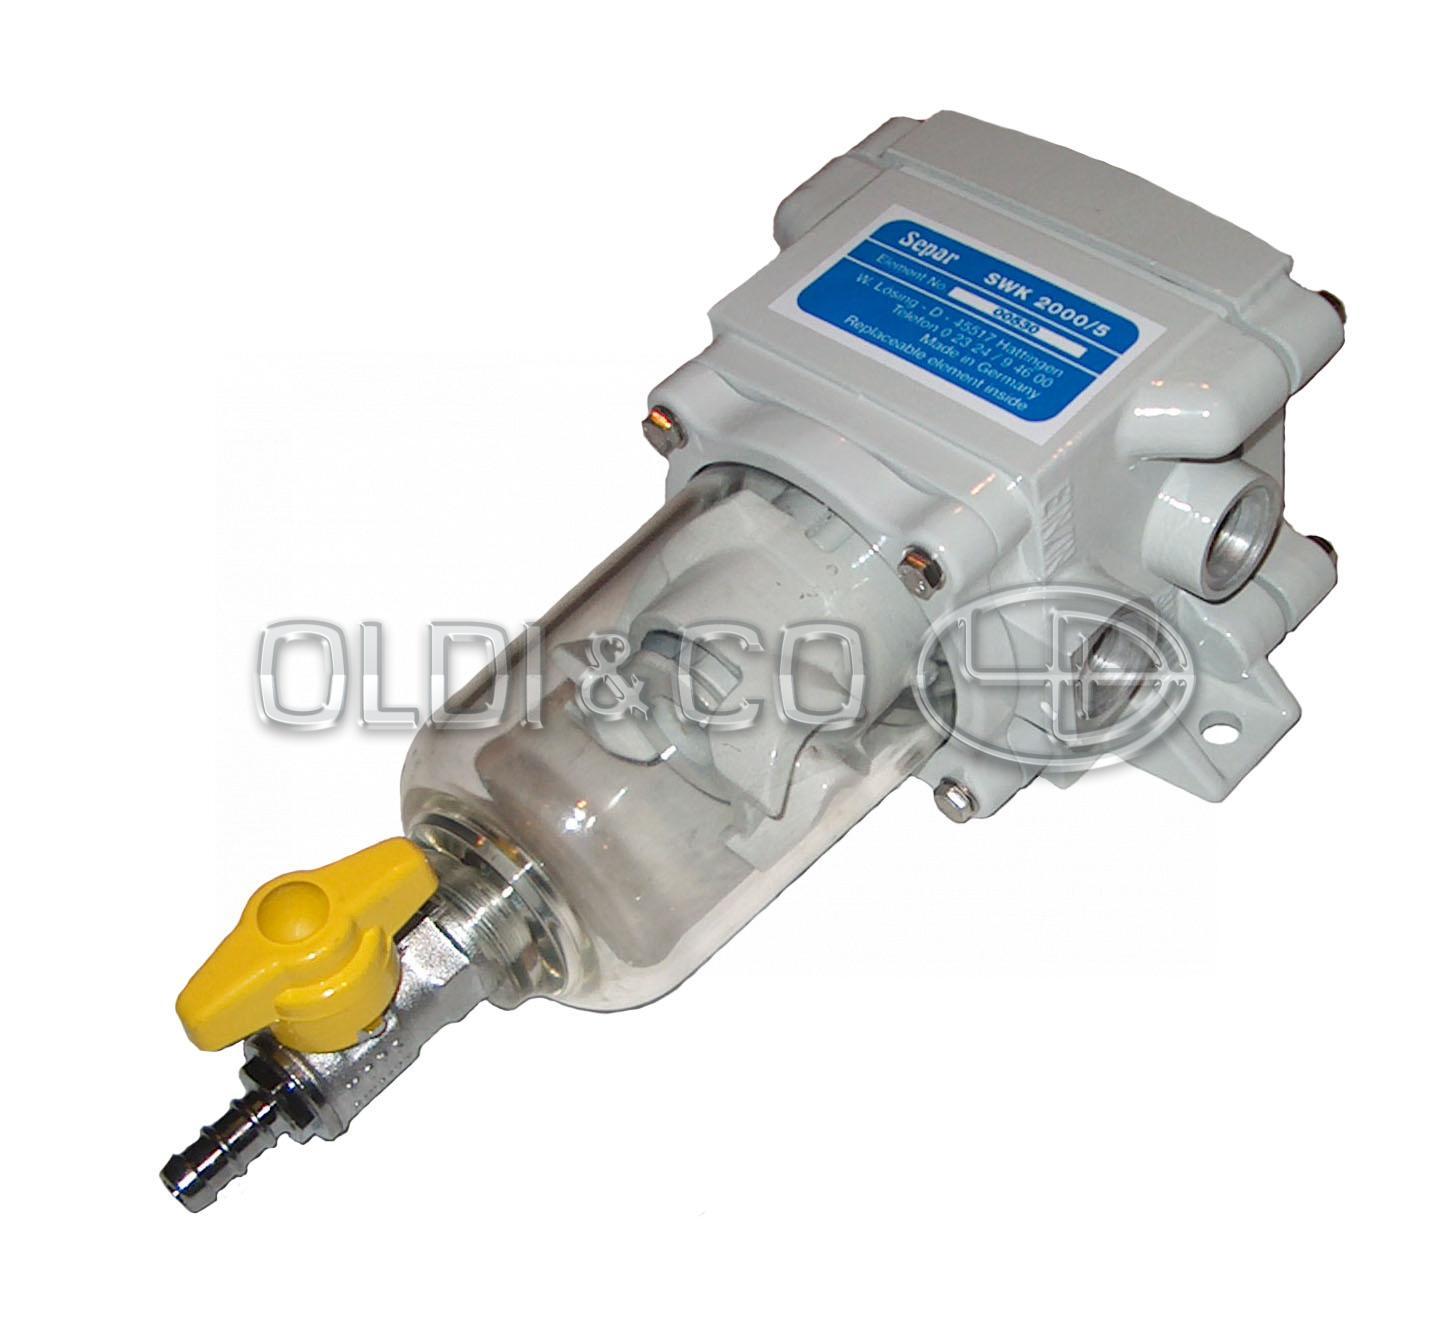 04.012.02278 Fuel system parts → Fuel separator filter